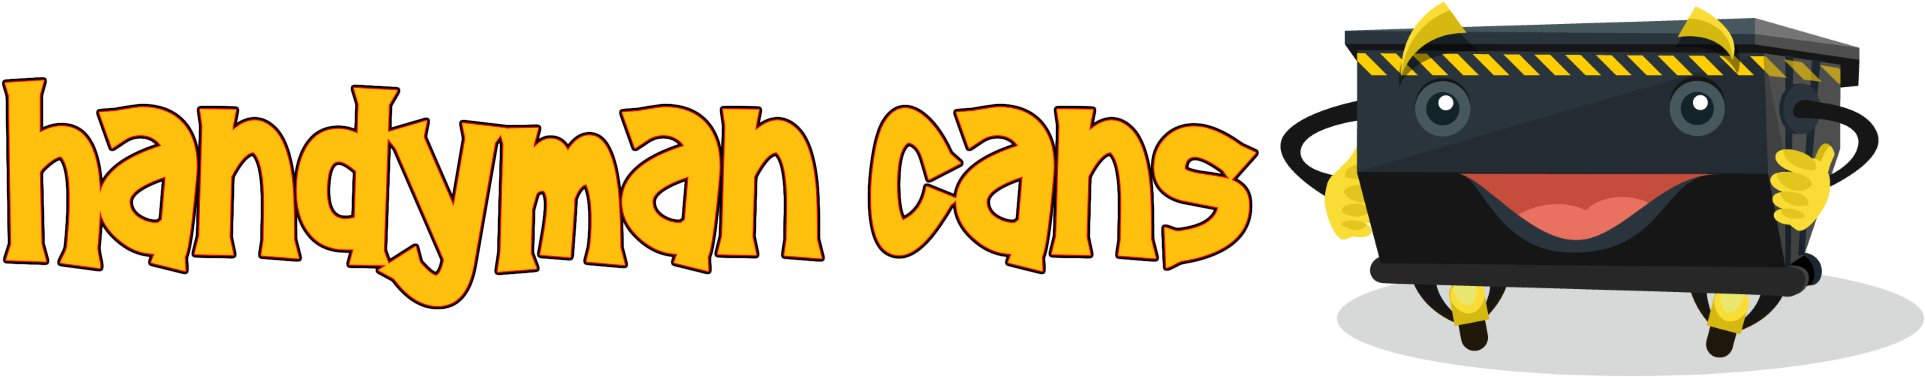 Handyman Cans Animated Logo